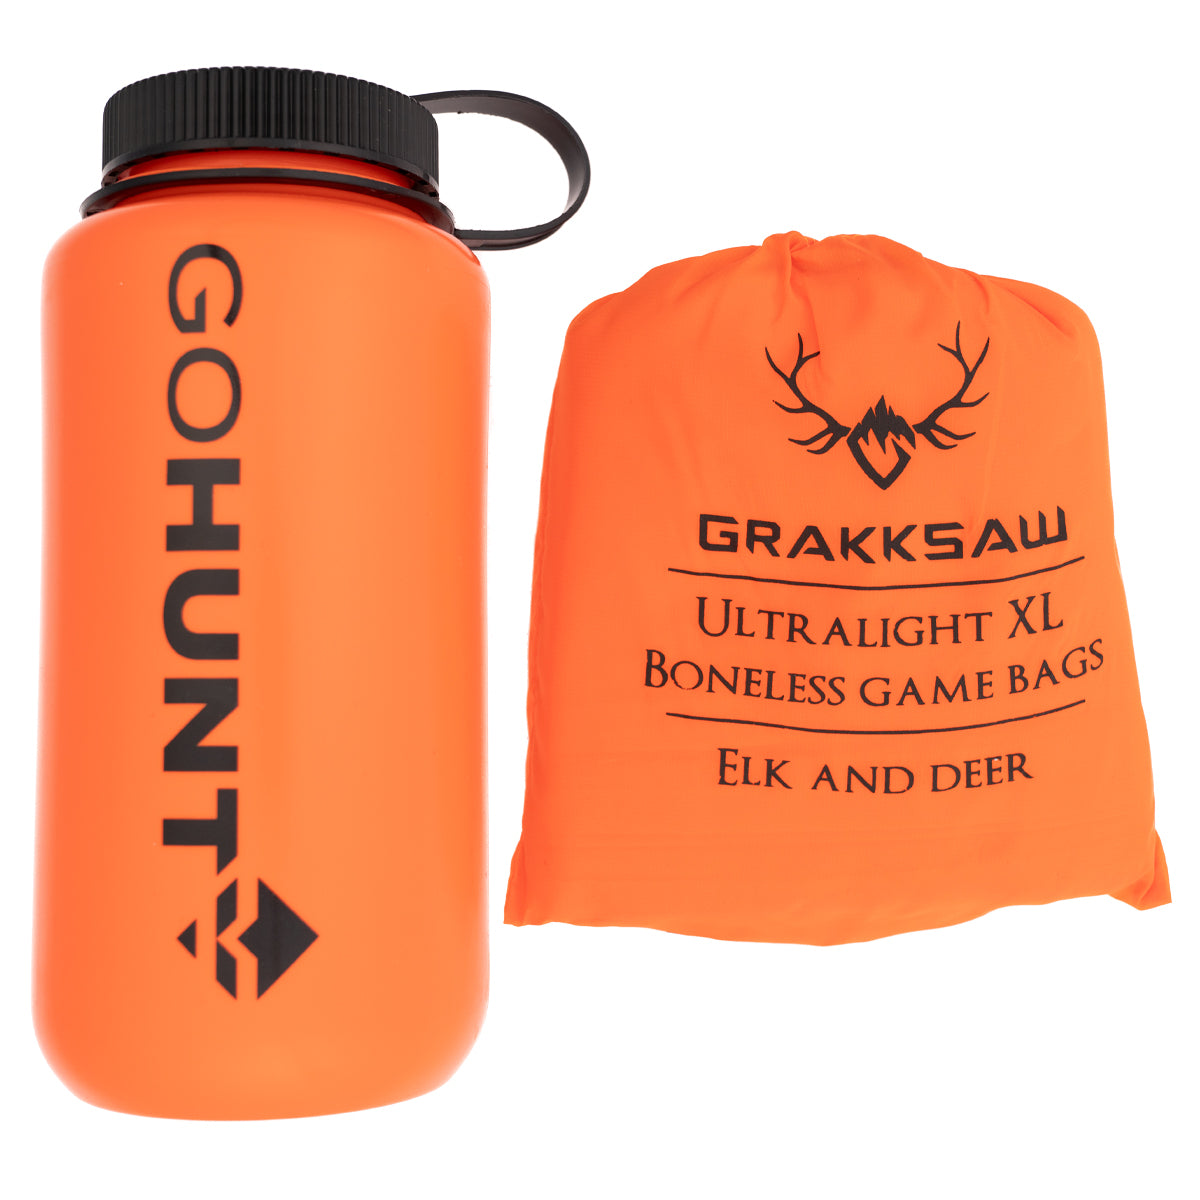 Grakksaw Ultralight XL Game Bags in  by GOHUNT | Grakksaw - GOHUNT Shop